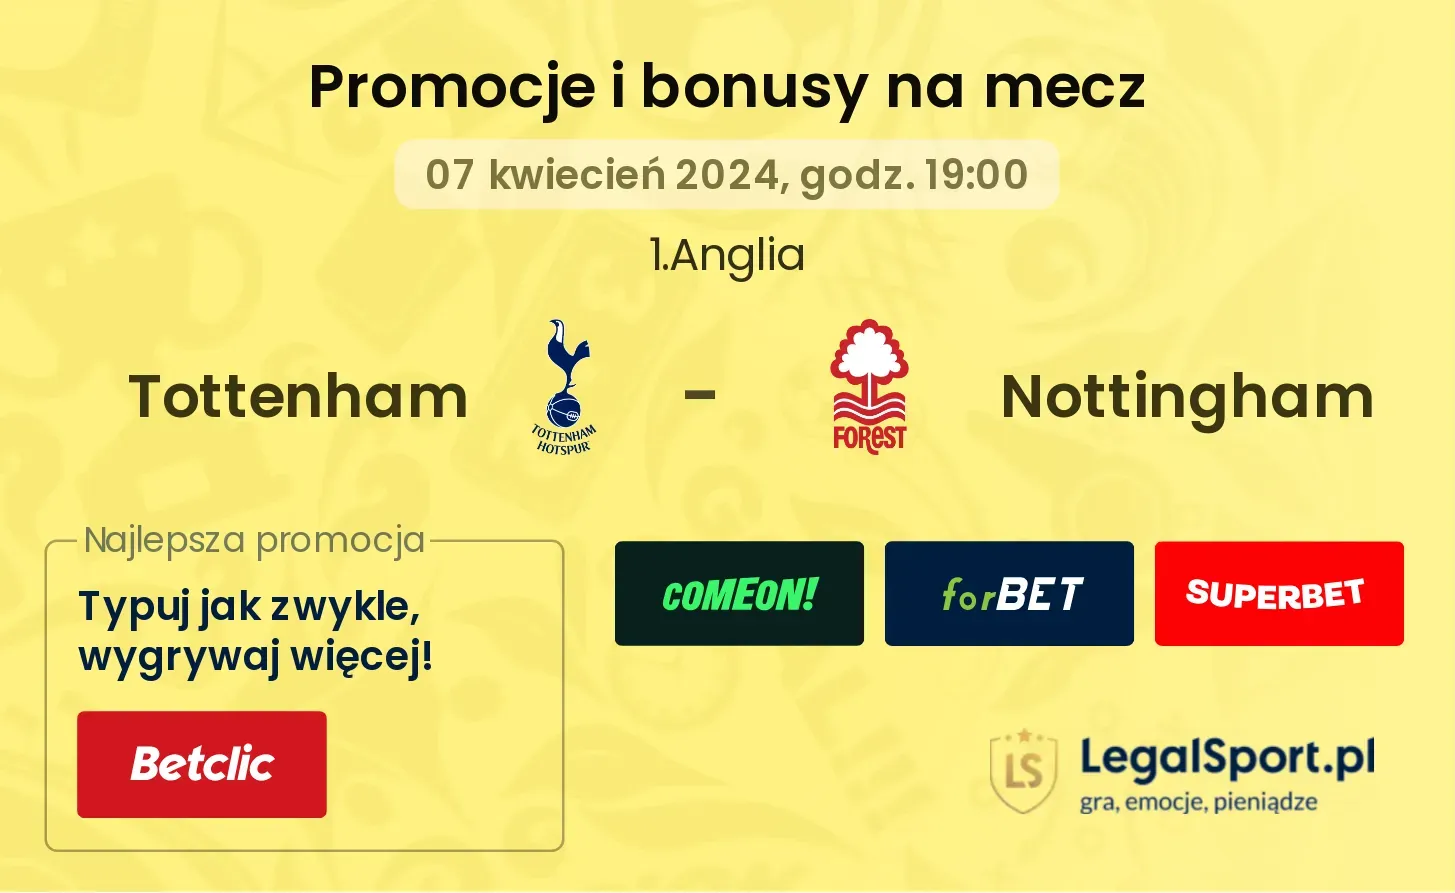 Tottenham - Nottingham promocje bonusy na mecz